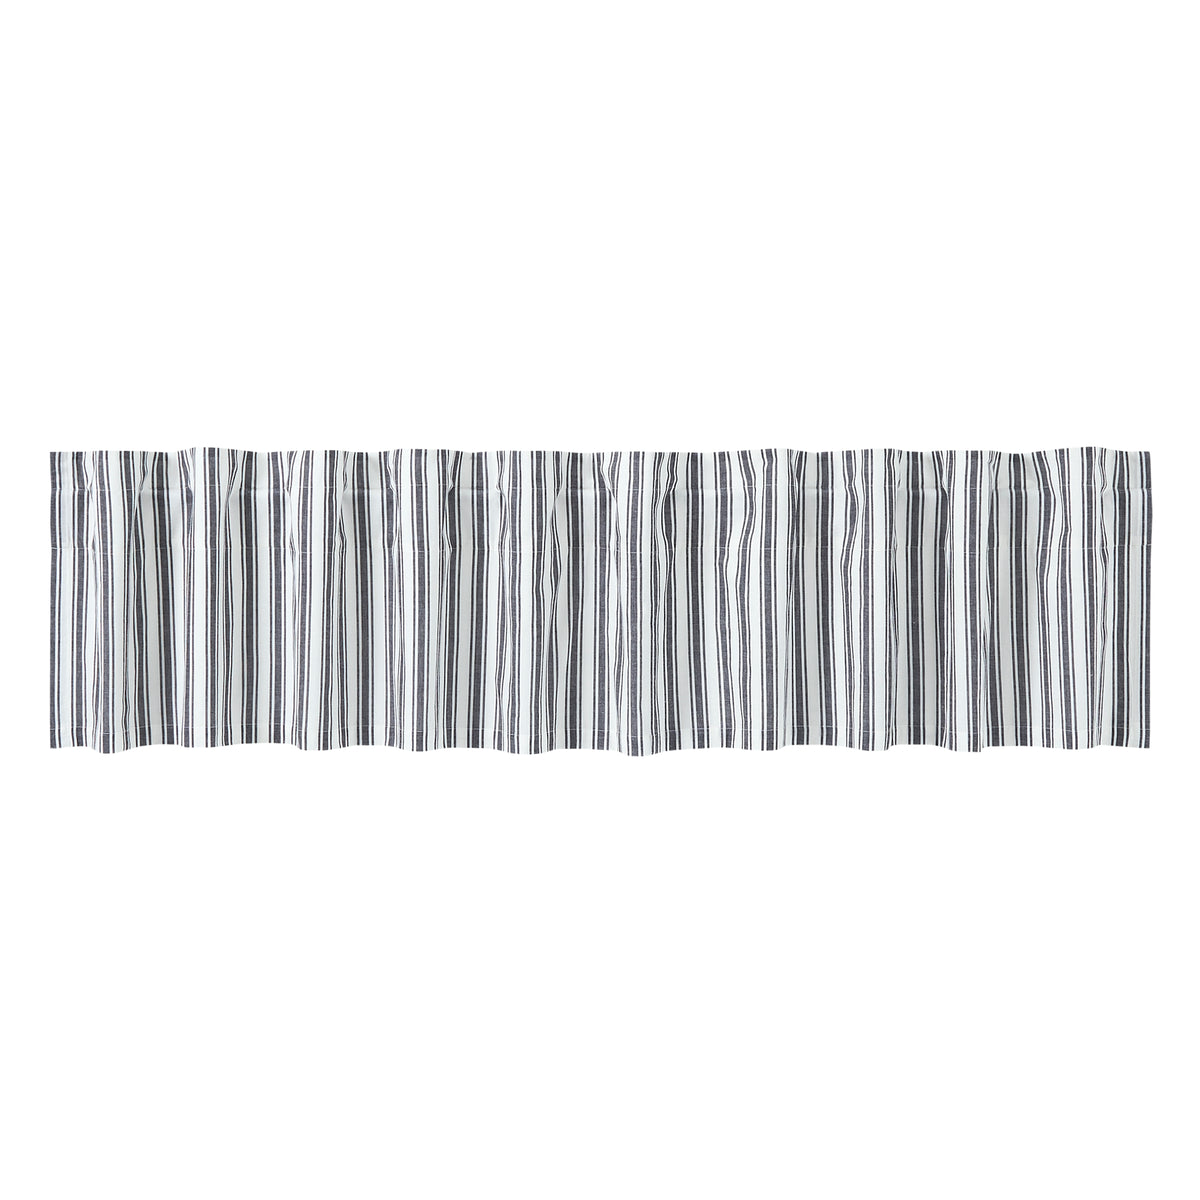 April & Olive Sawyer Mill Black Ticking Stripe Valance 16x90 By VHC Brands